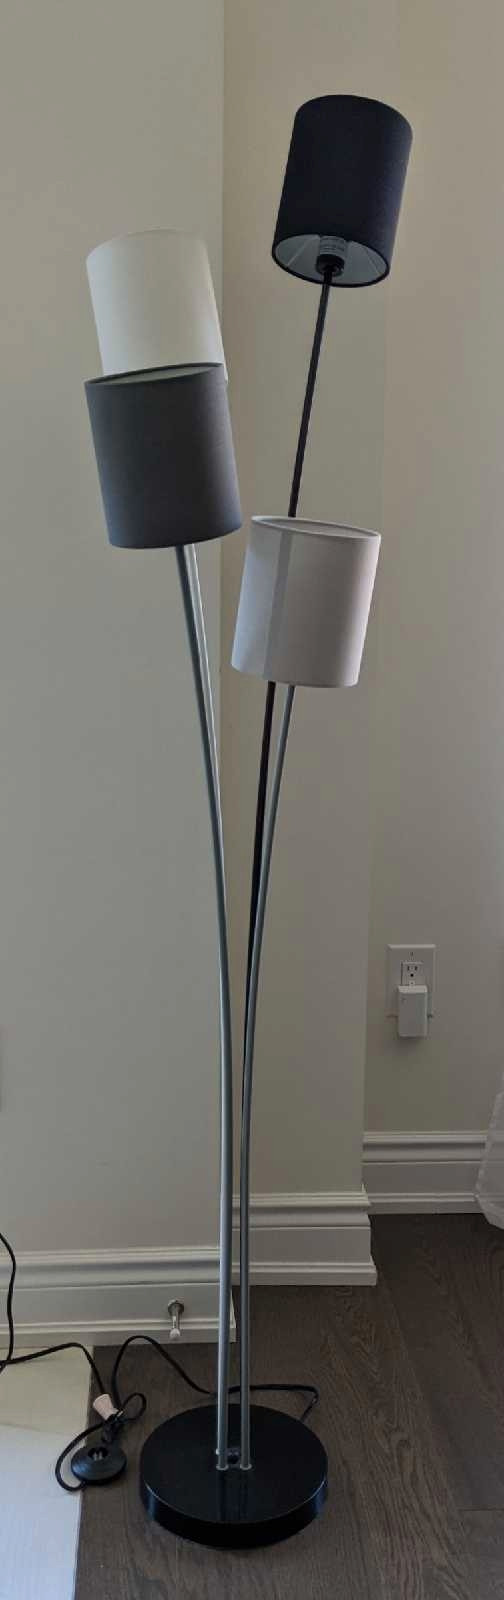 62" (156cm) high Floor Lamp in Indoor Lighting & Fans in Mississauga / Peel Region - Image 3